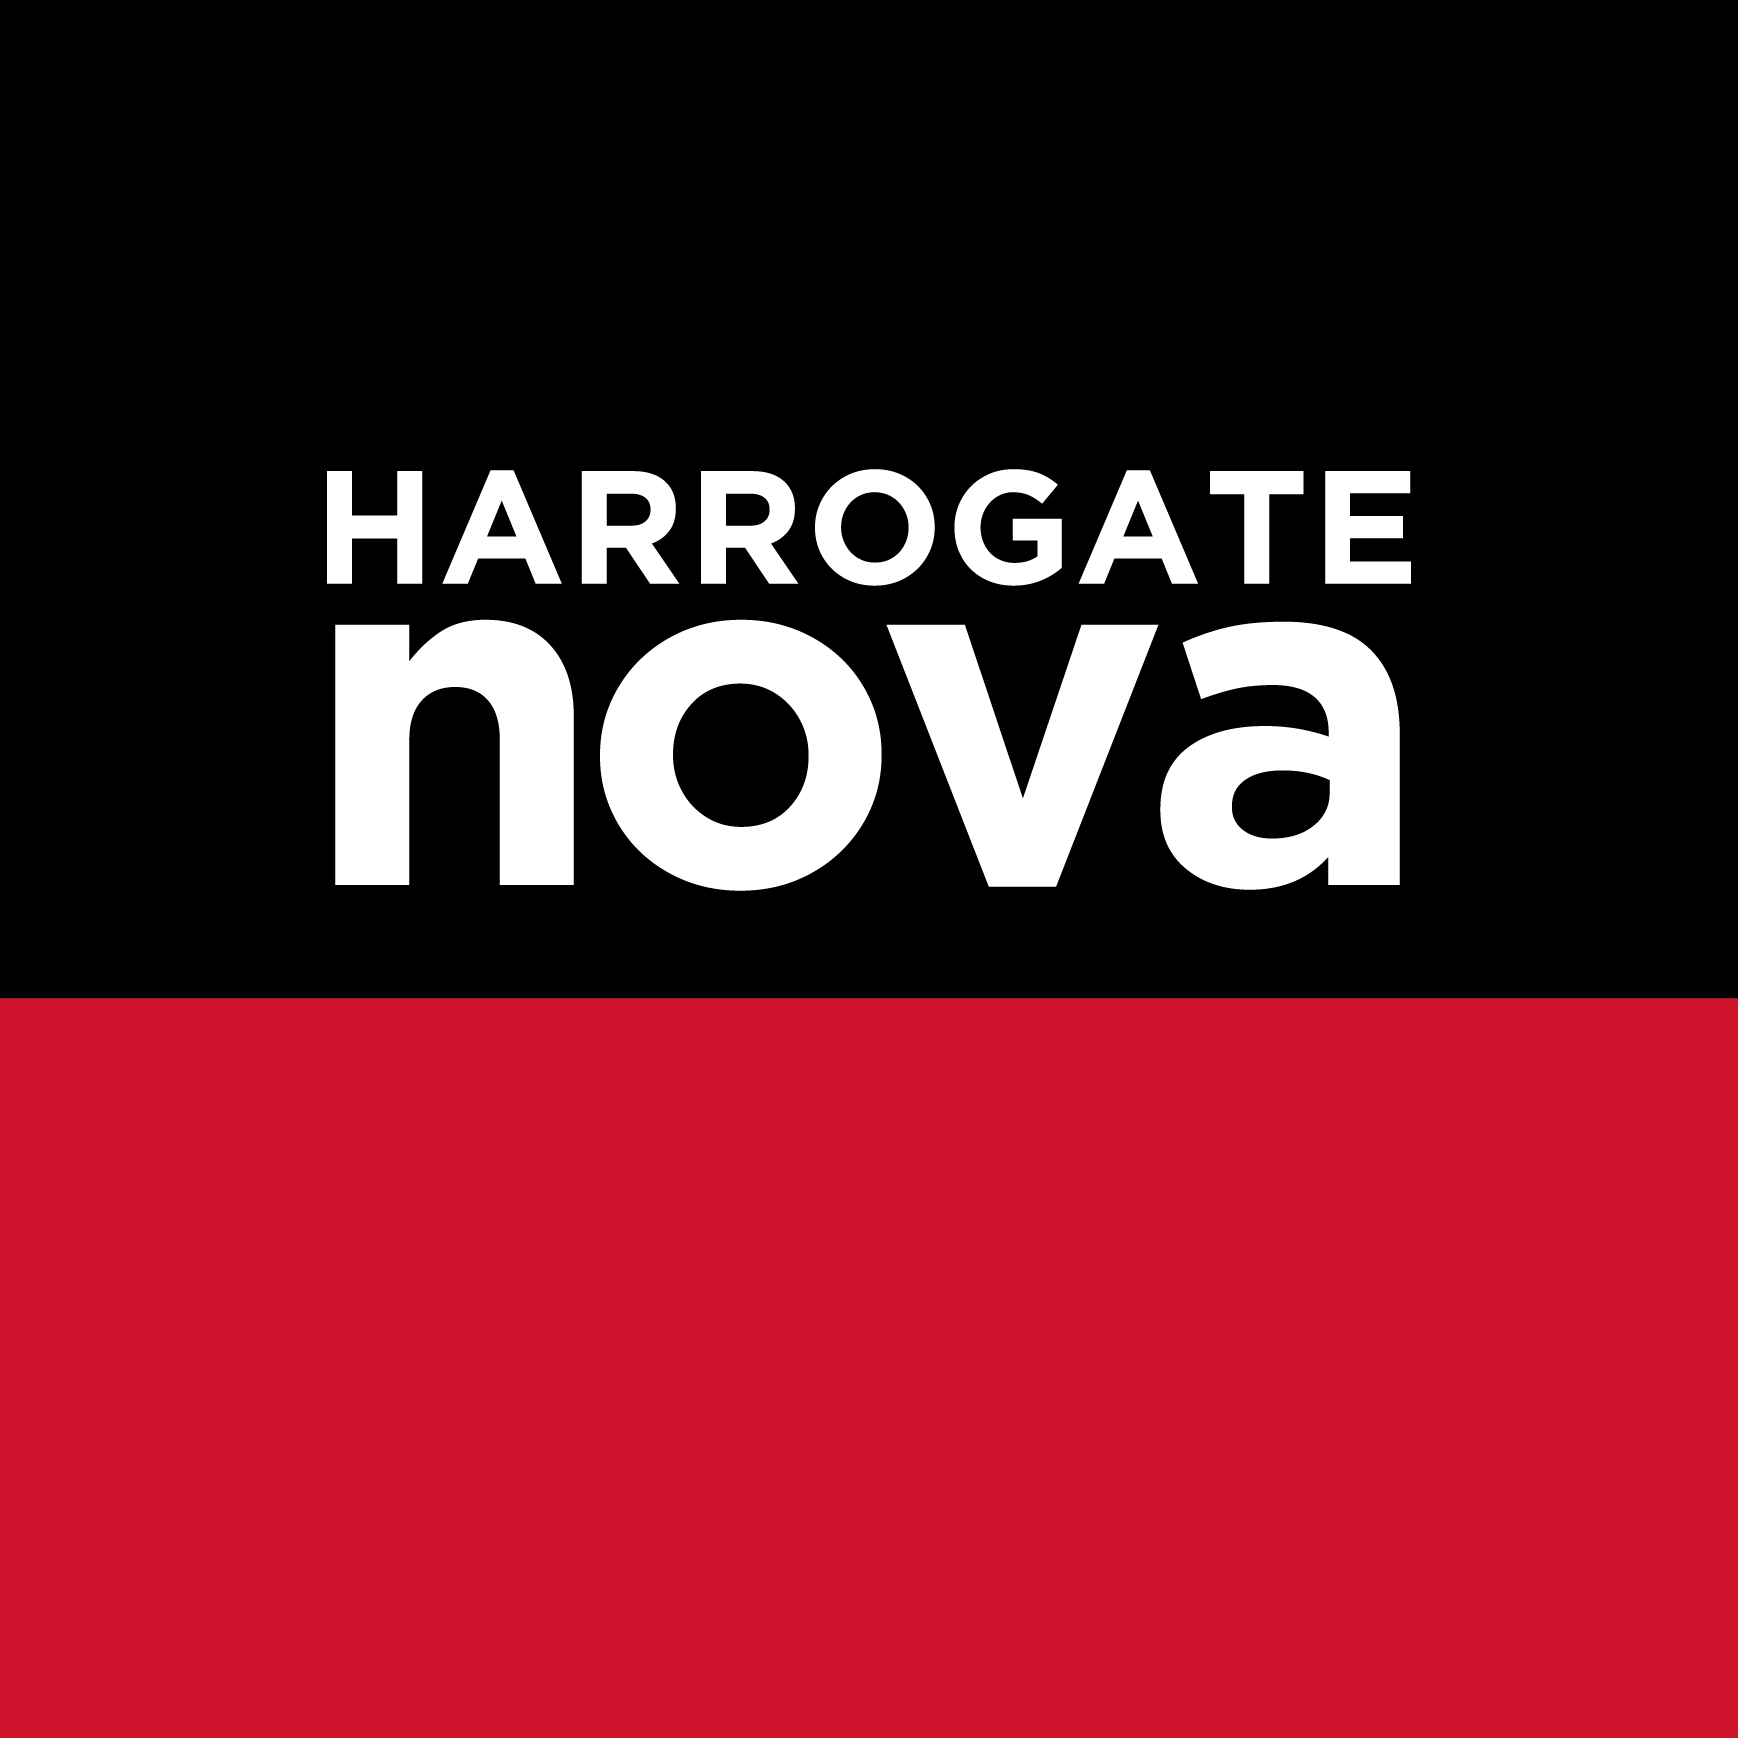 Club Image for HARROGATE NOVA WINTER